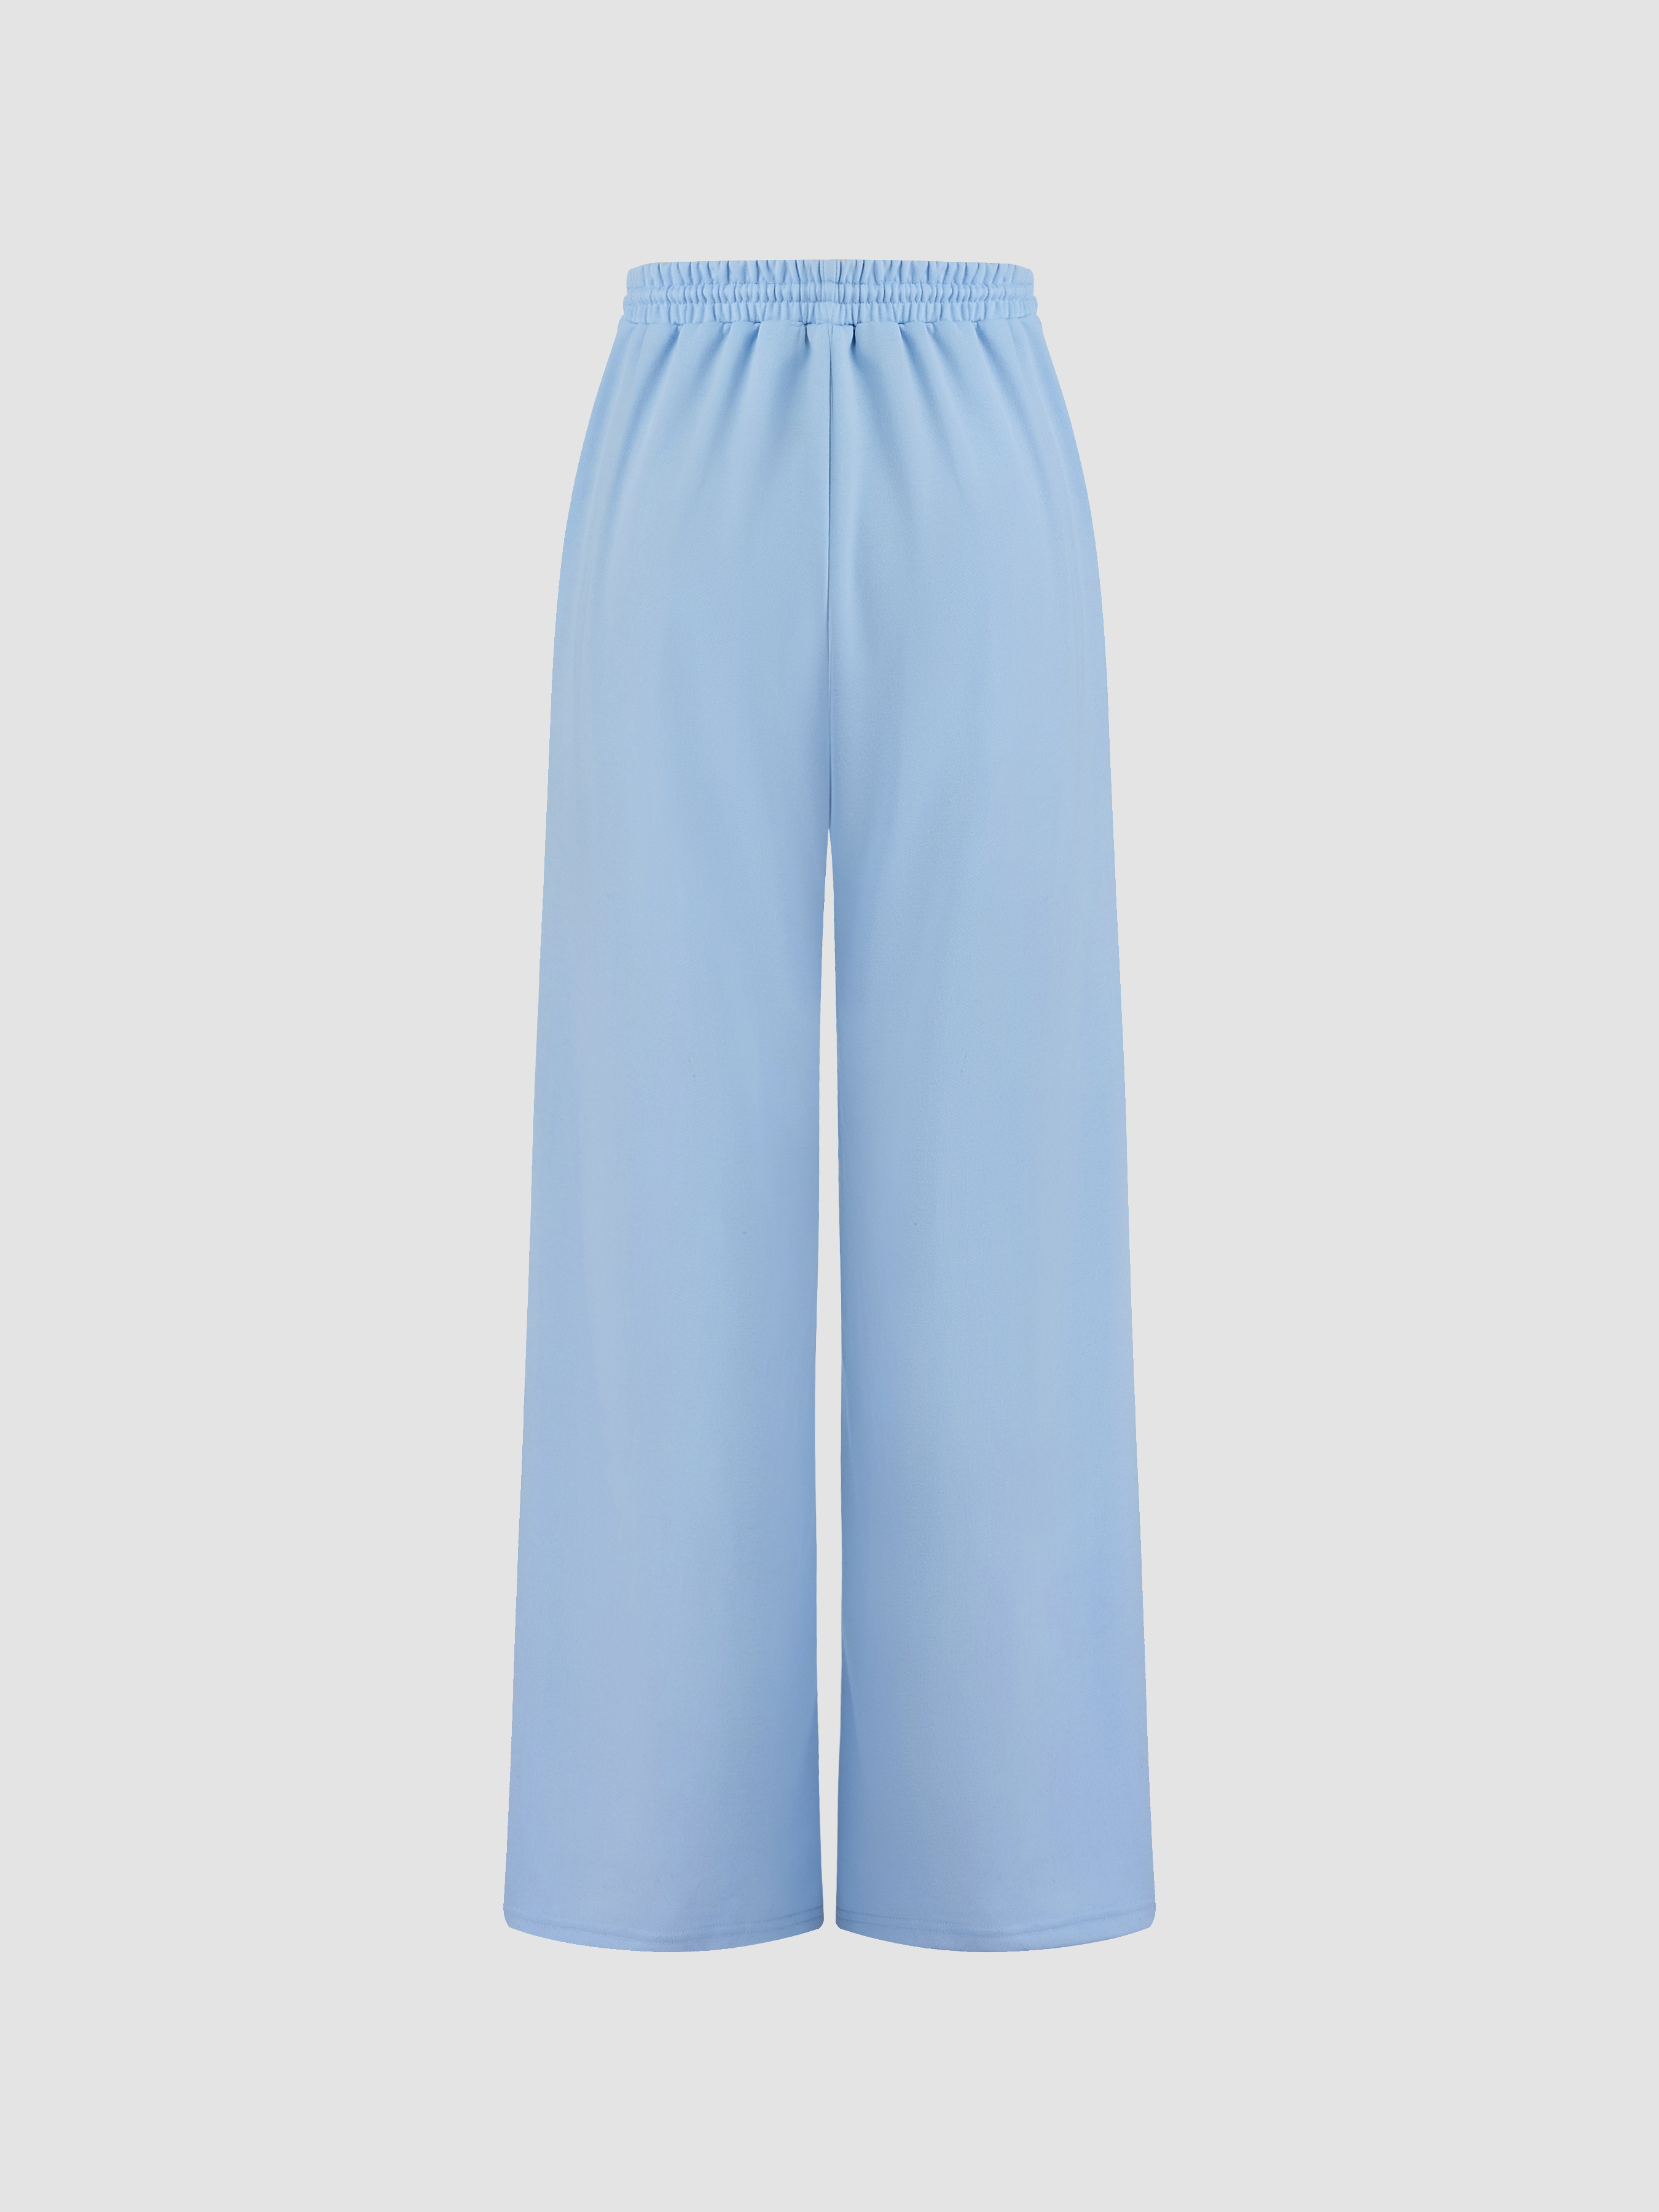 Solid Blue Trouser - LASTINCH